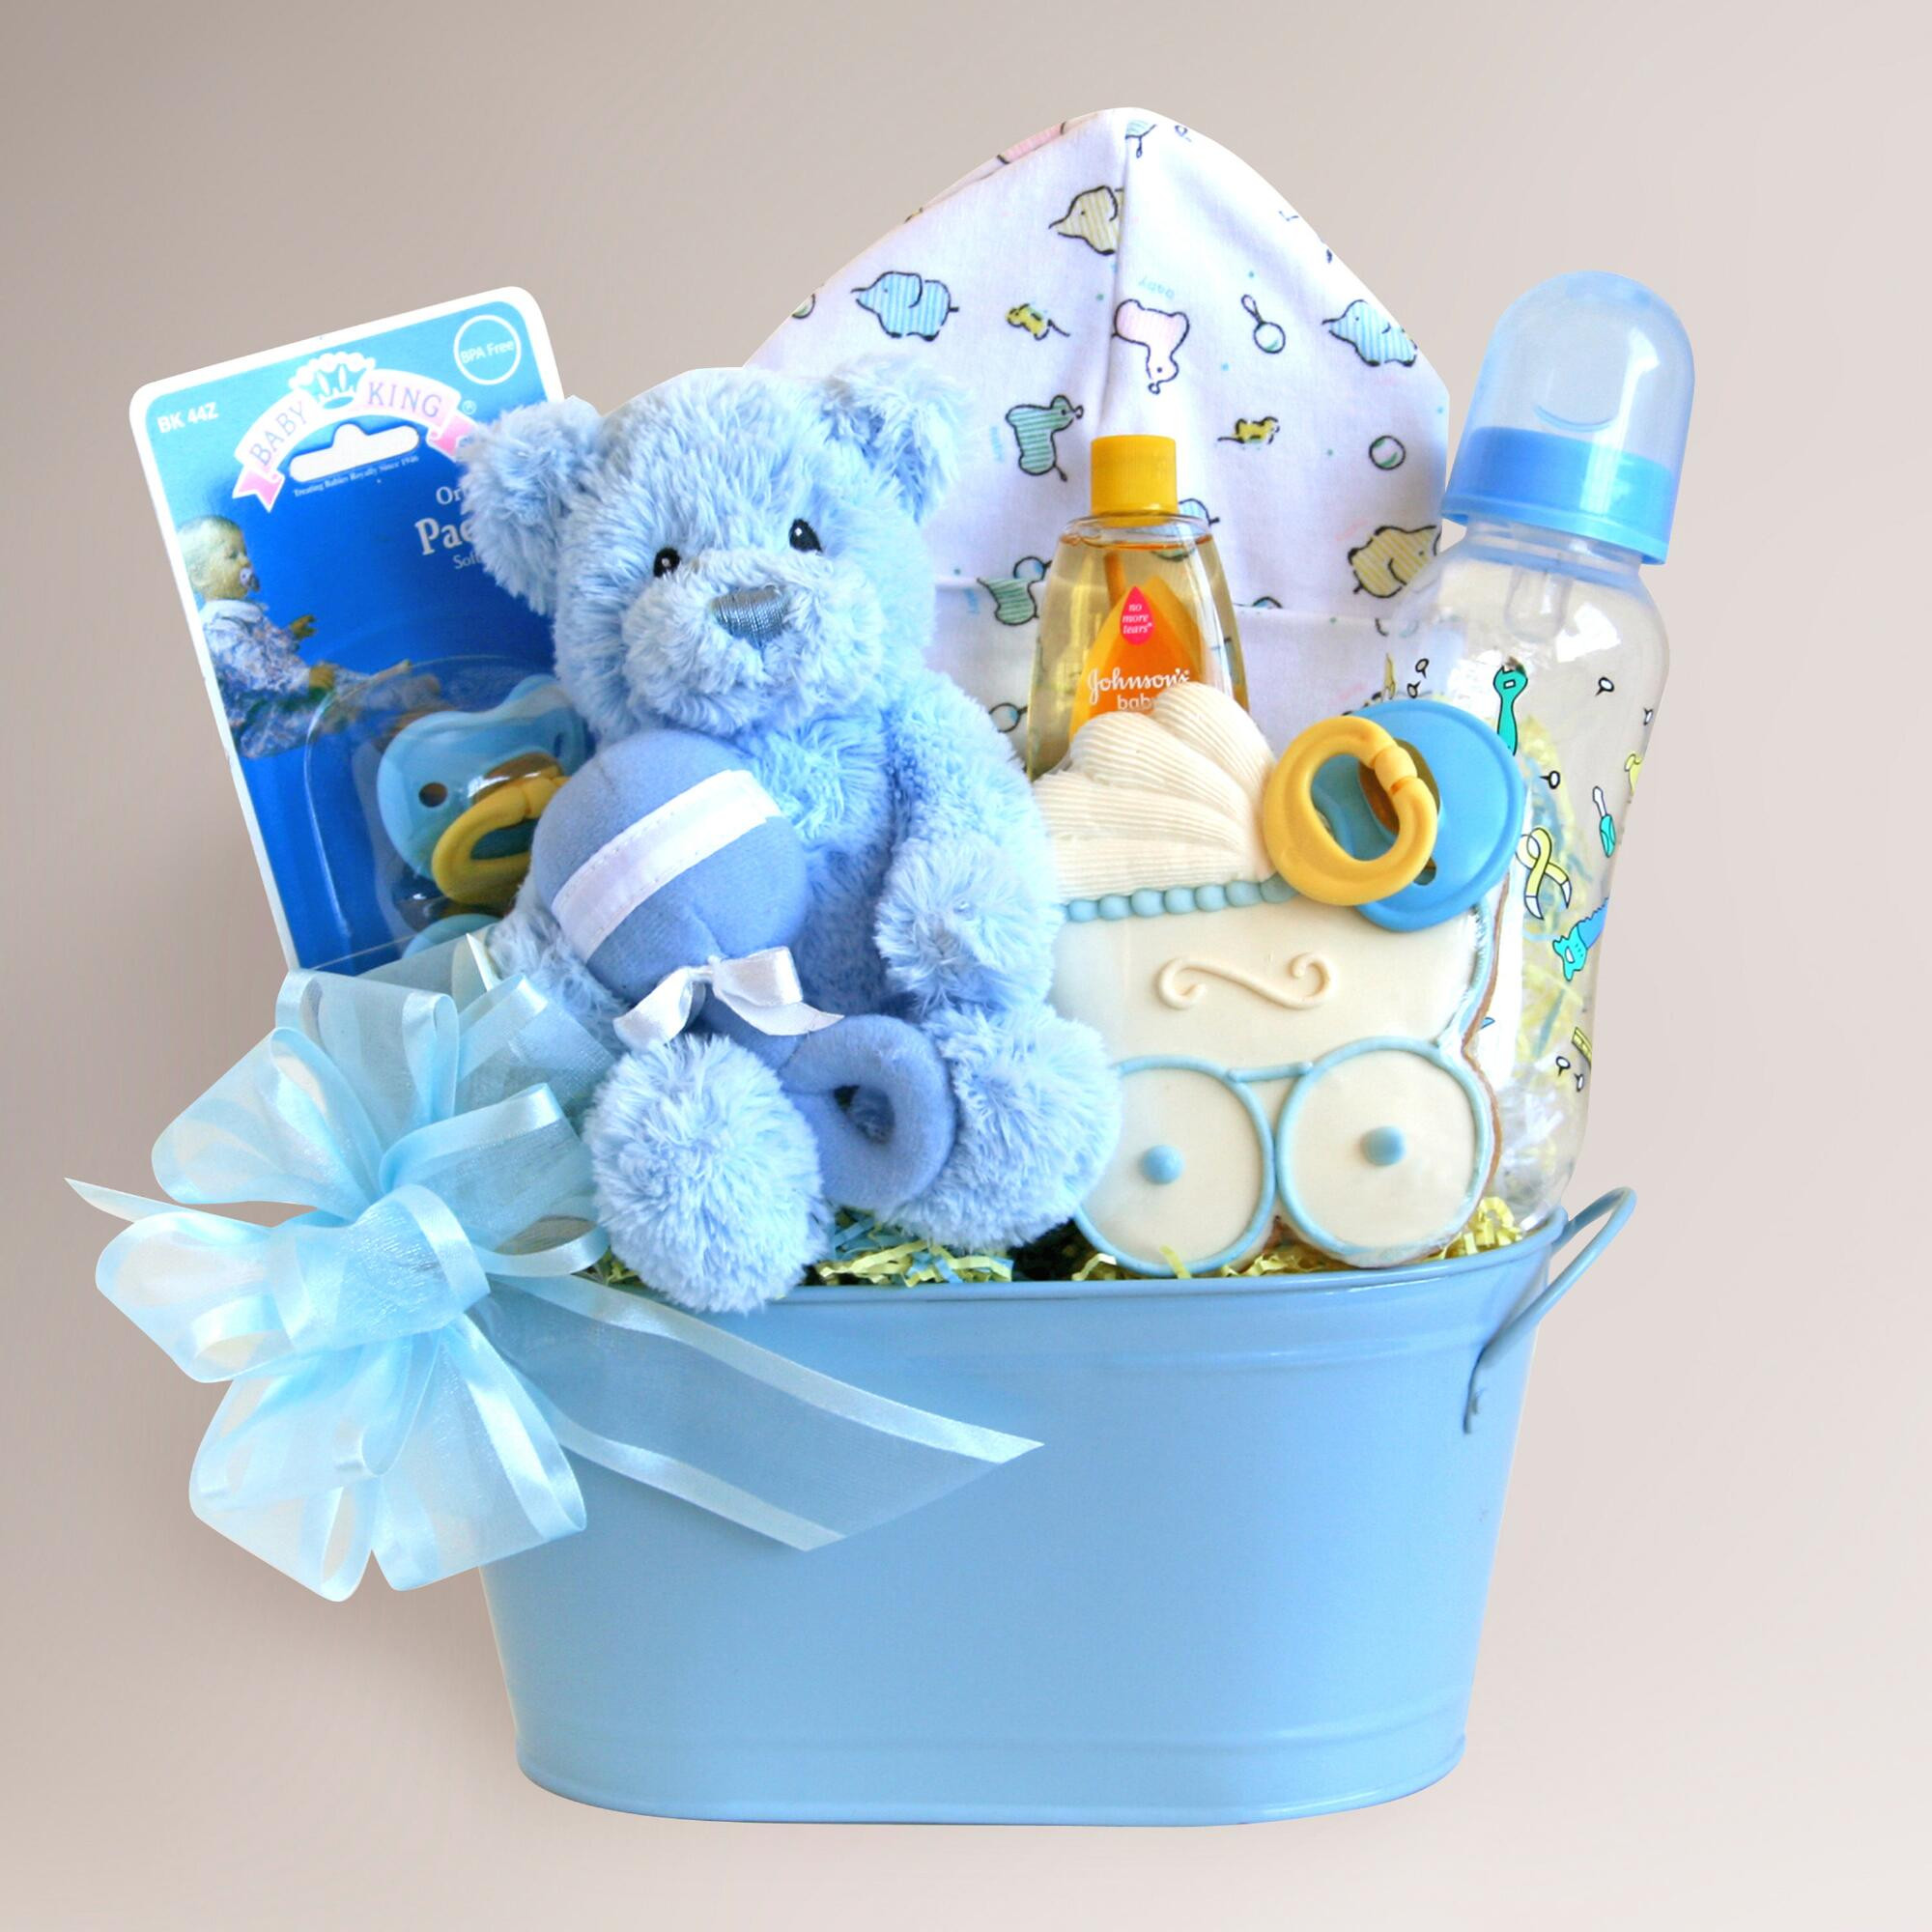 Gift Basket For Baby Boy
 Cuddly Wel e for Baby Boy Gift Basket